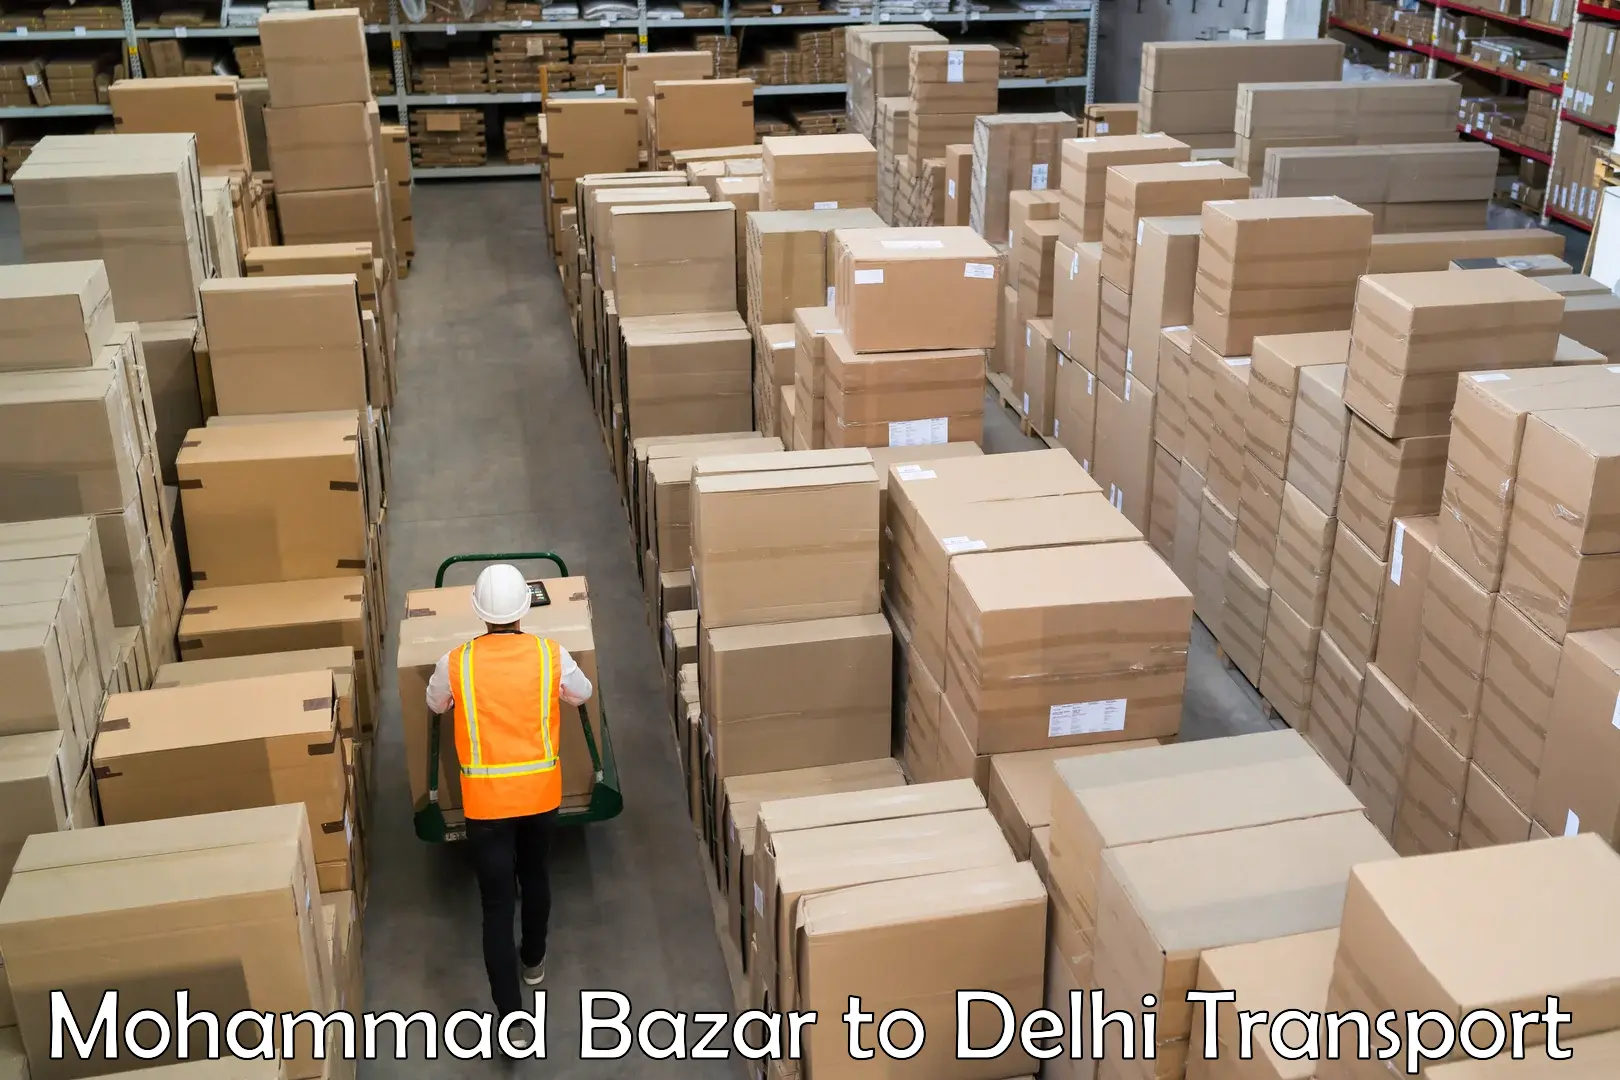 Shipping partner Mohammad Bazar to NCR